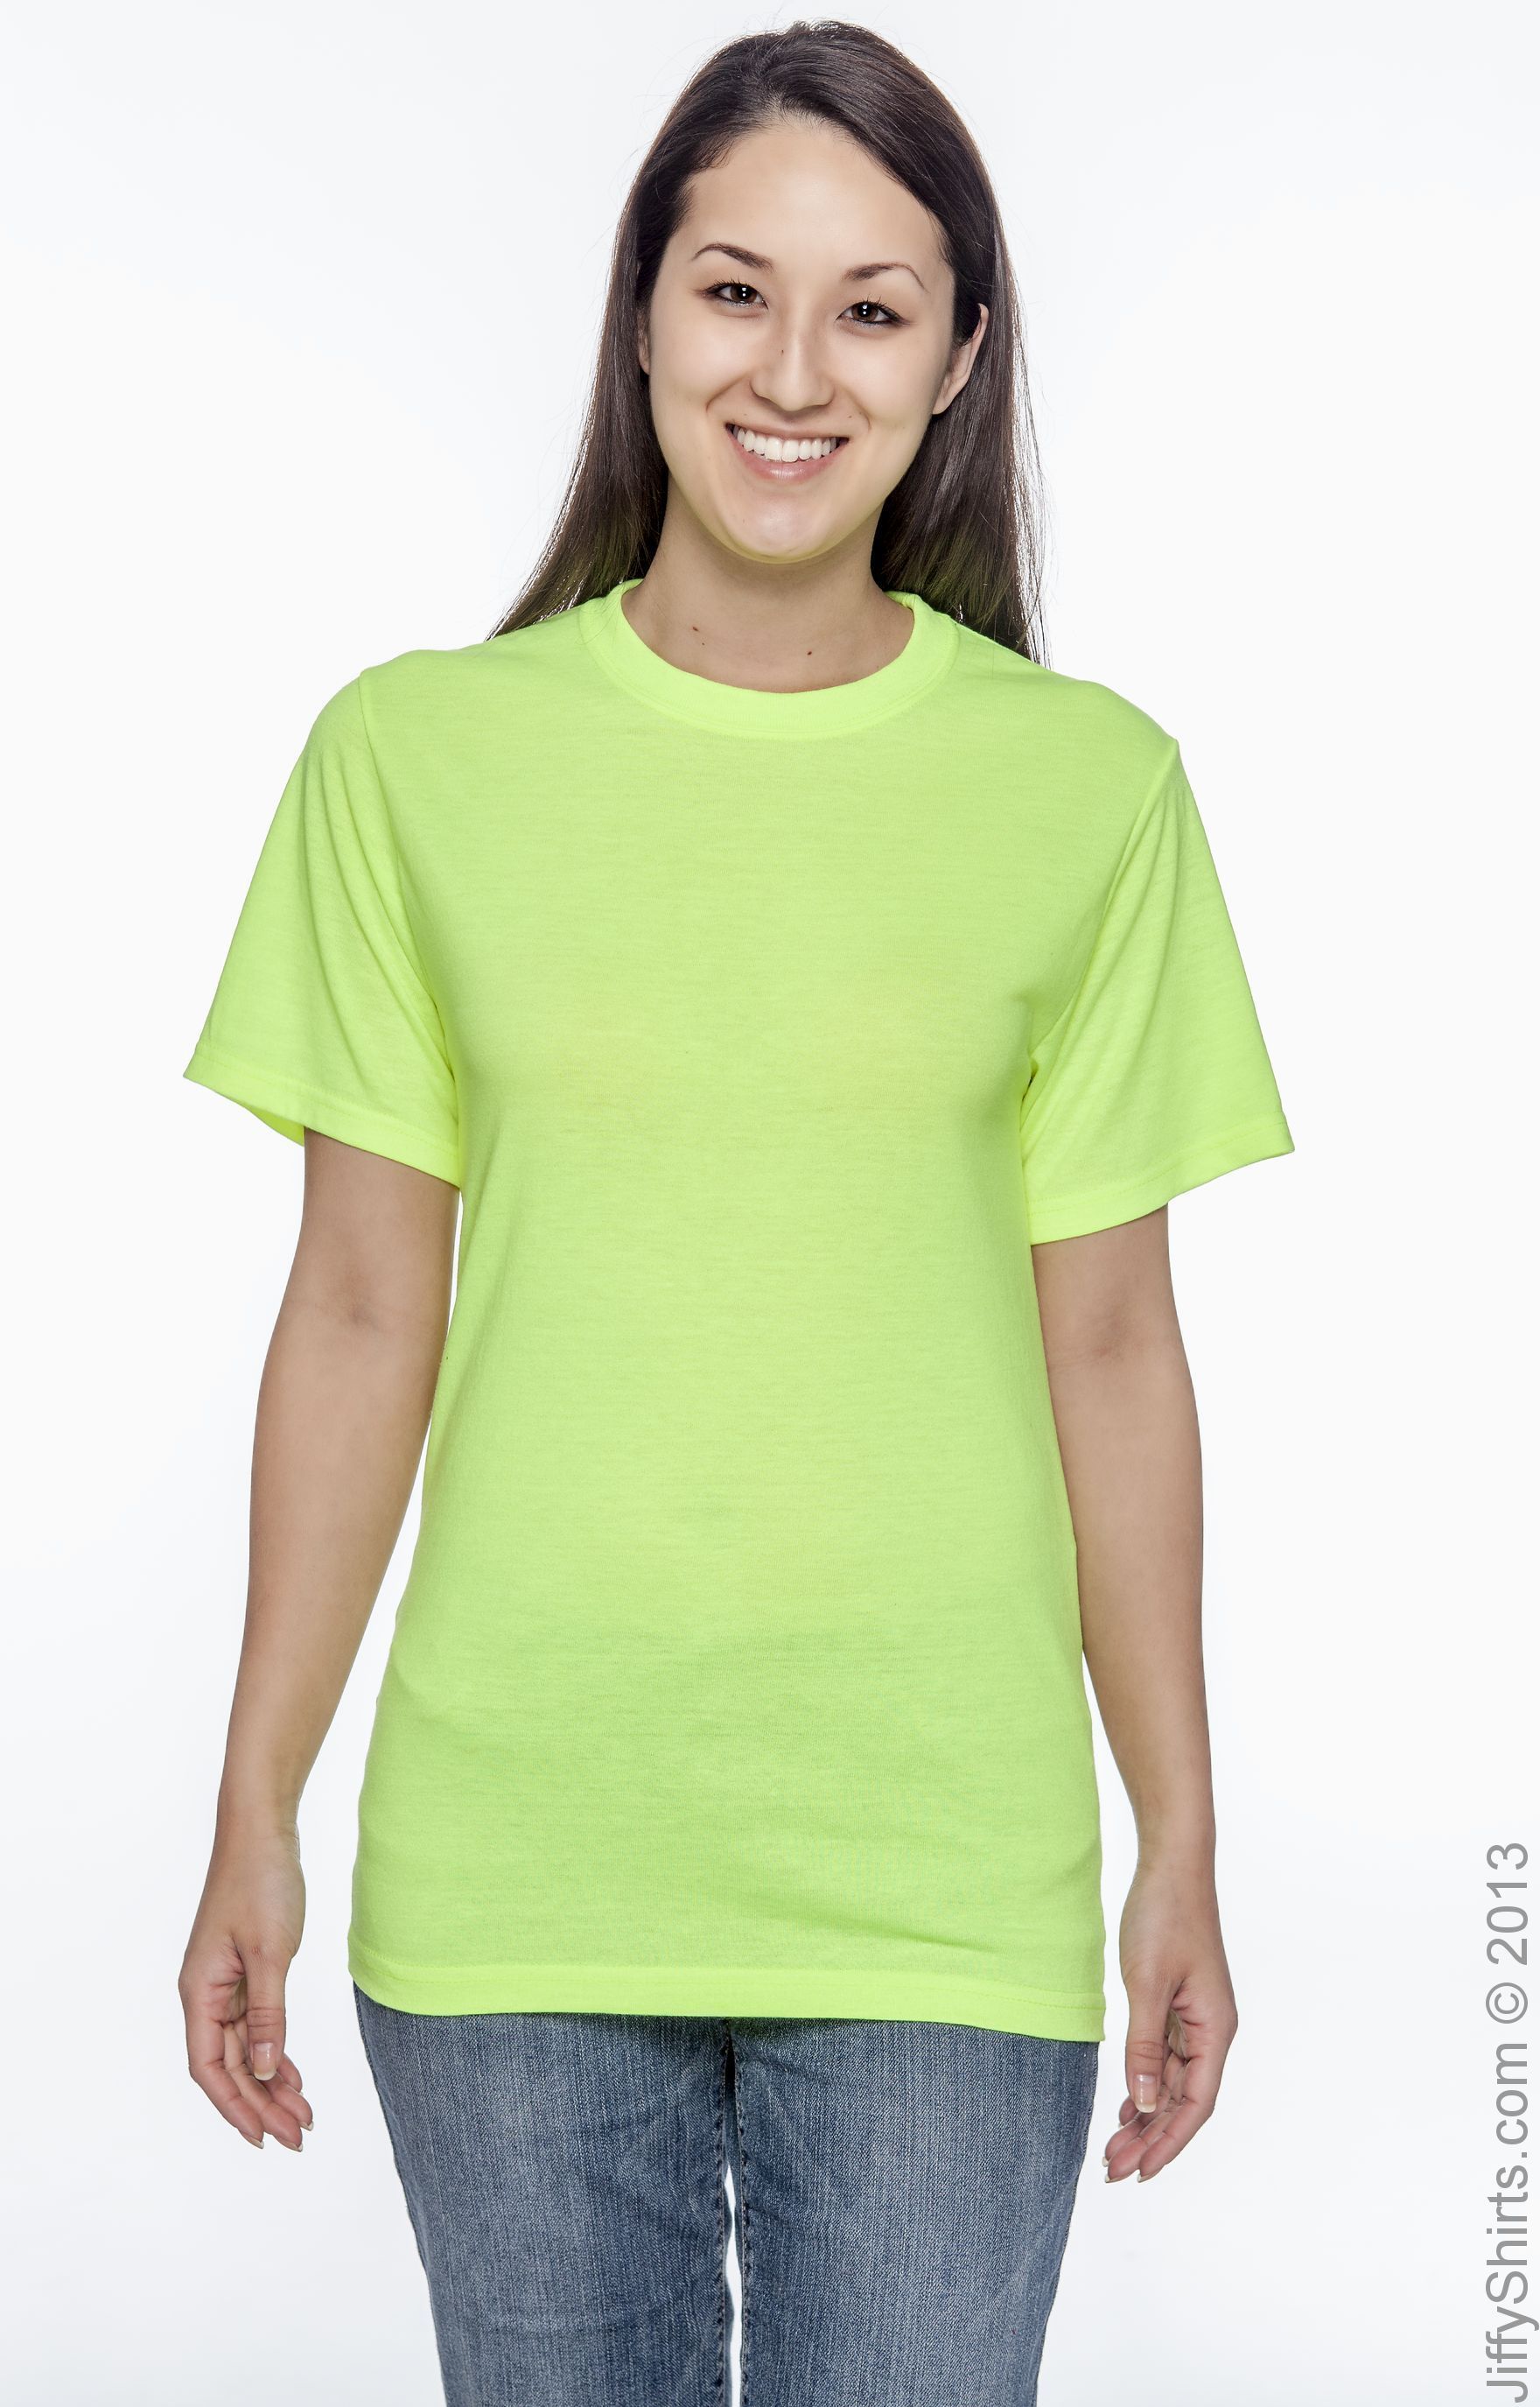 safety green dri fit shirts